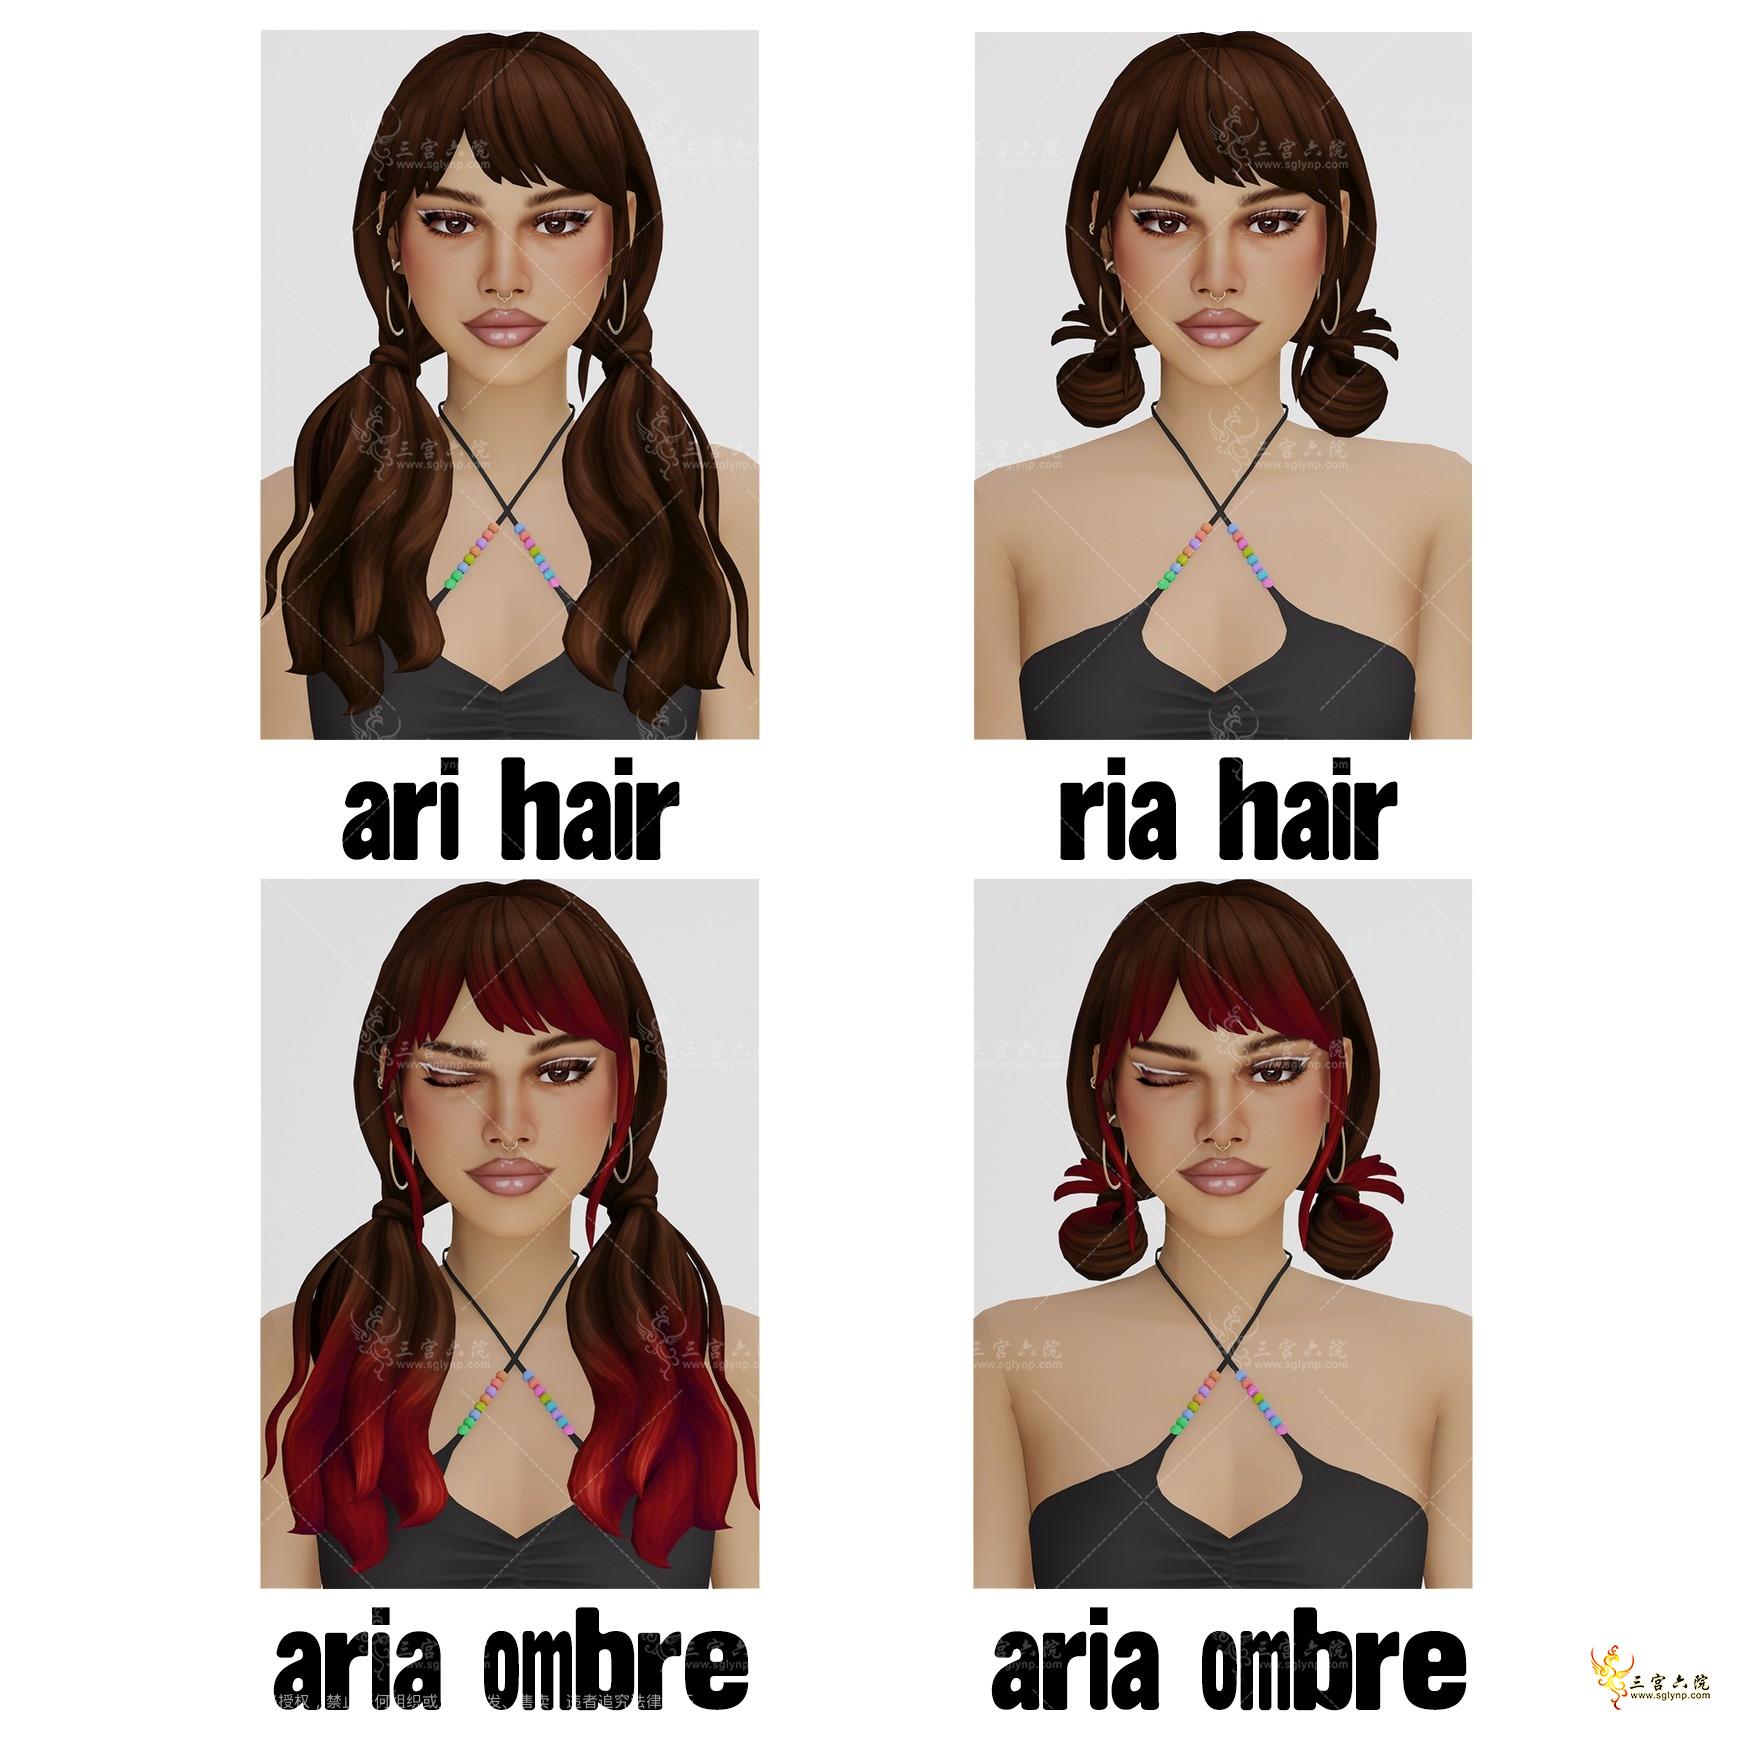 aria hair set prevs.png